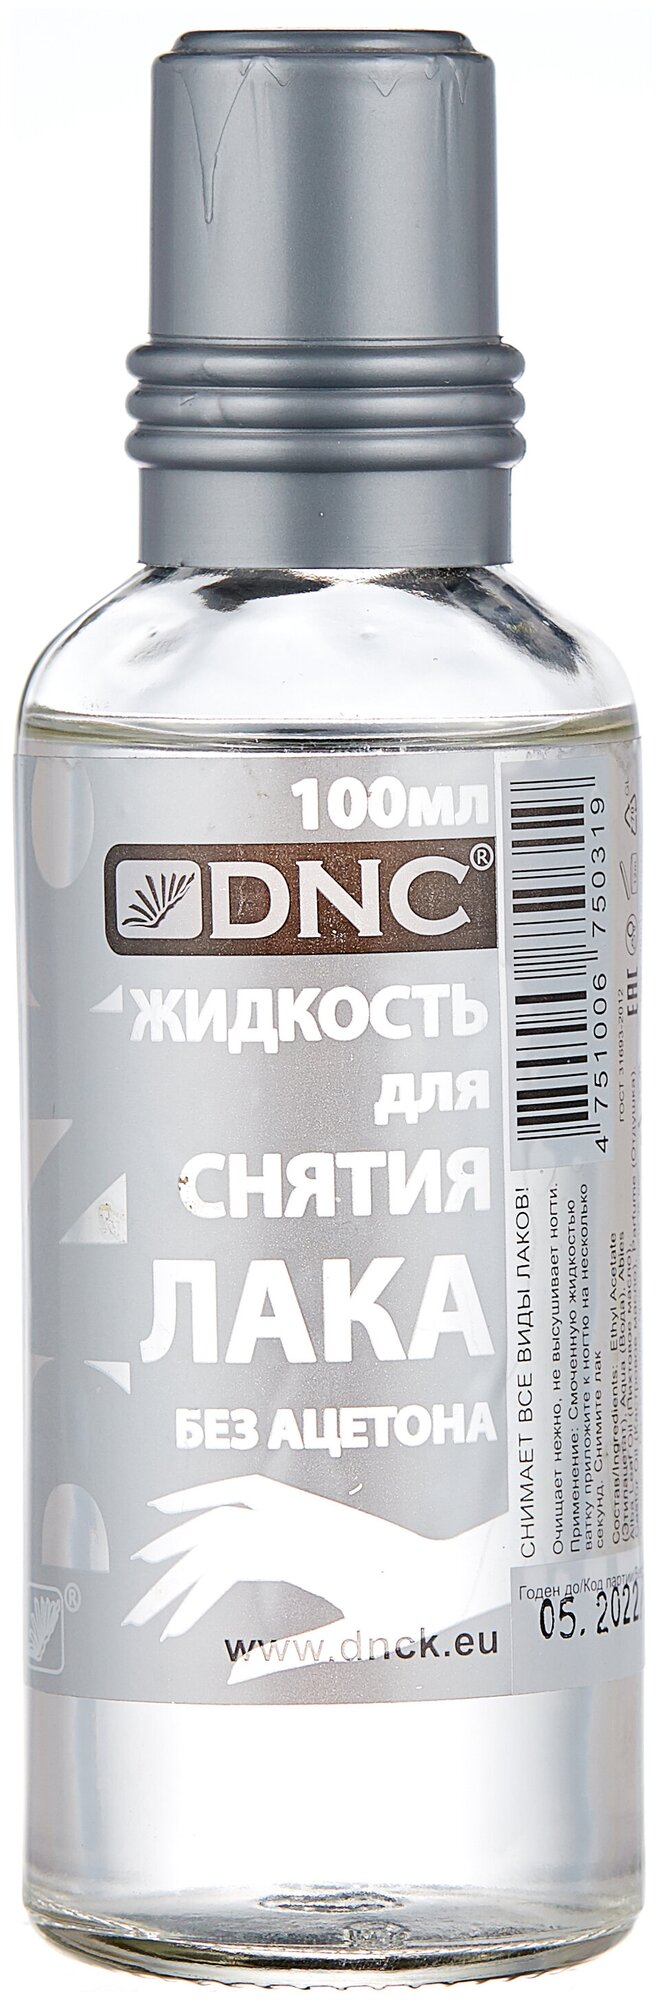 DNC Жидкость для снятия лака, без ацетона, 100 мл, DNC